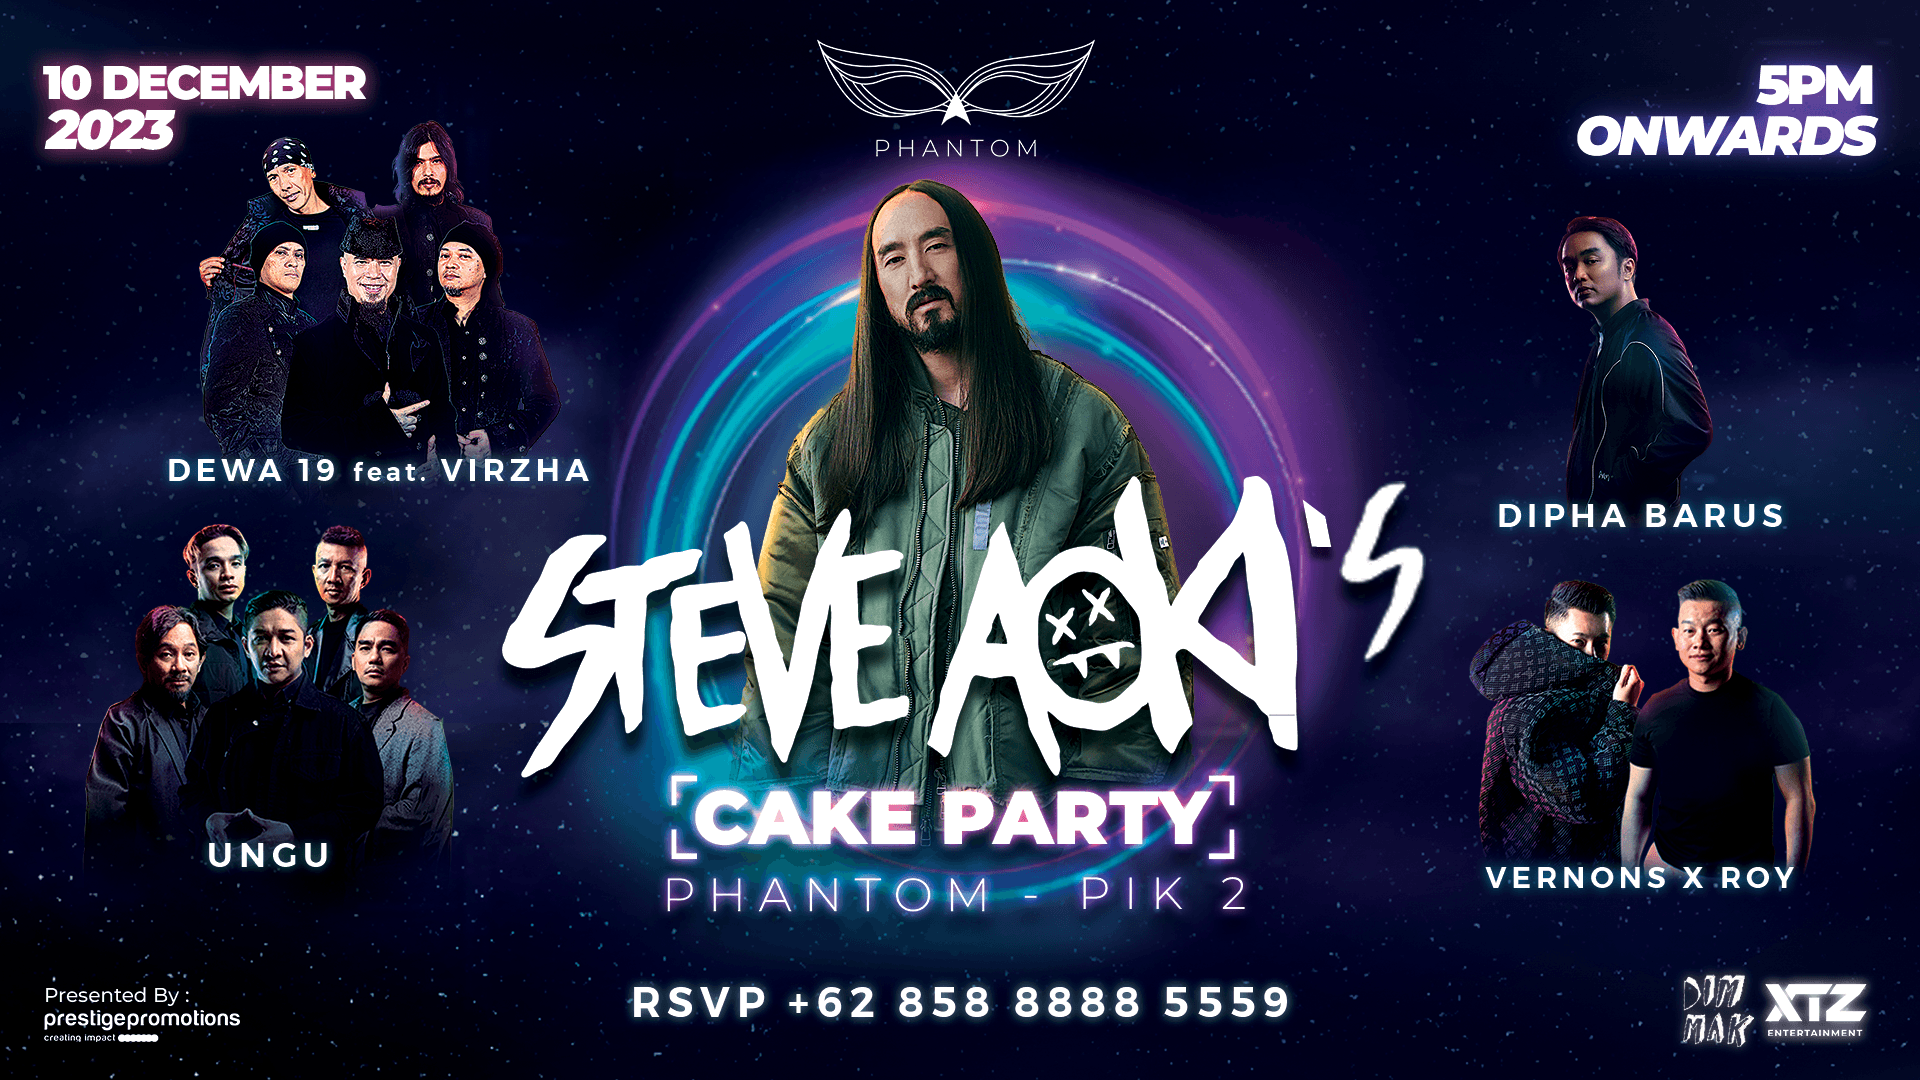 Steve Aoki Cake Party